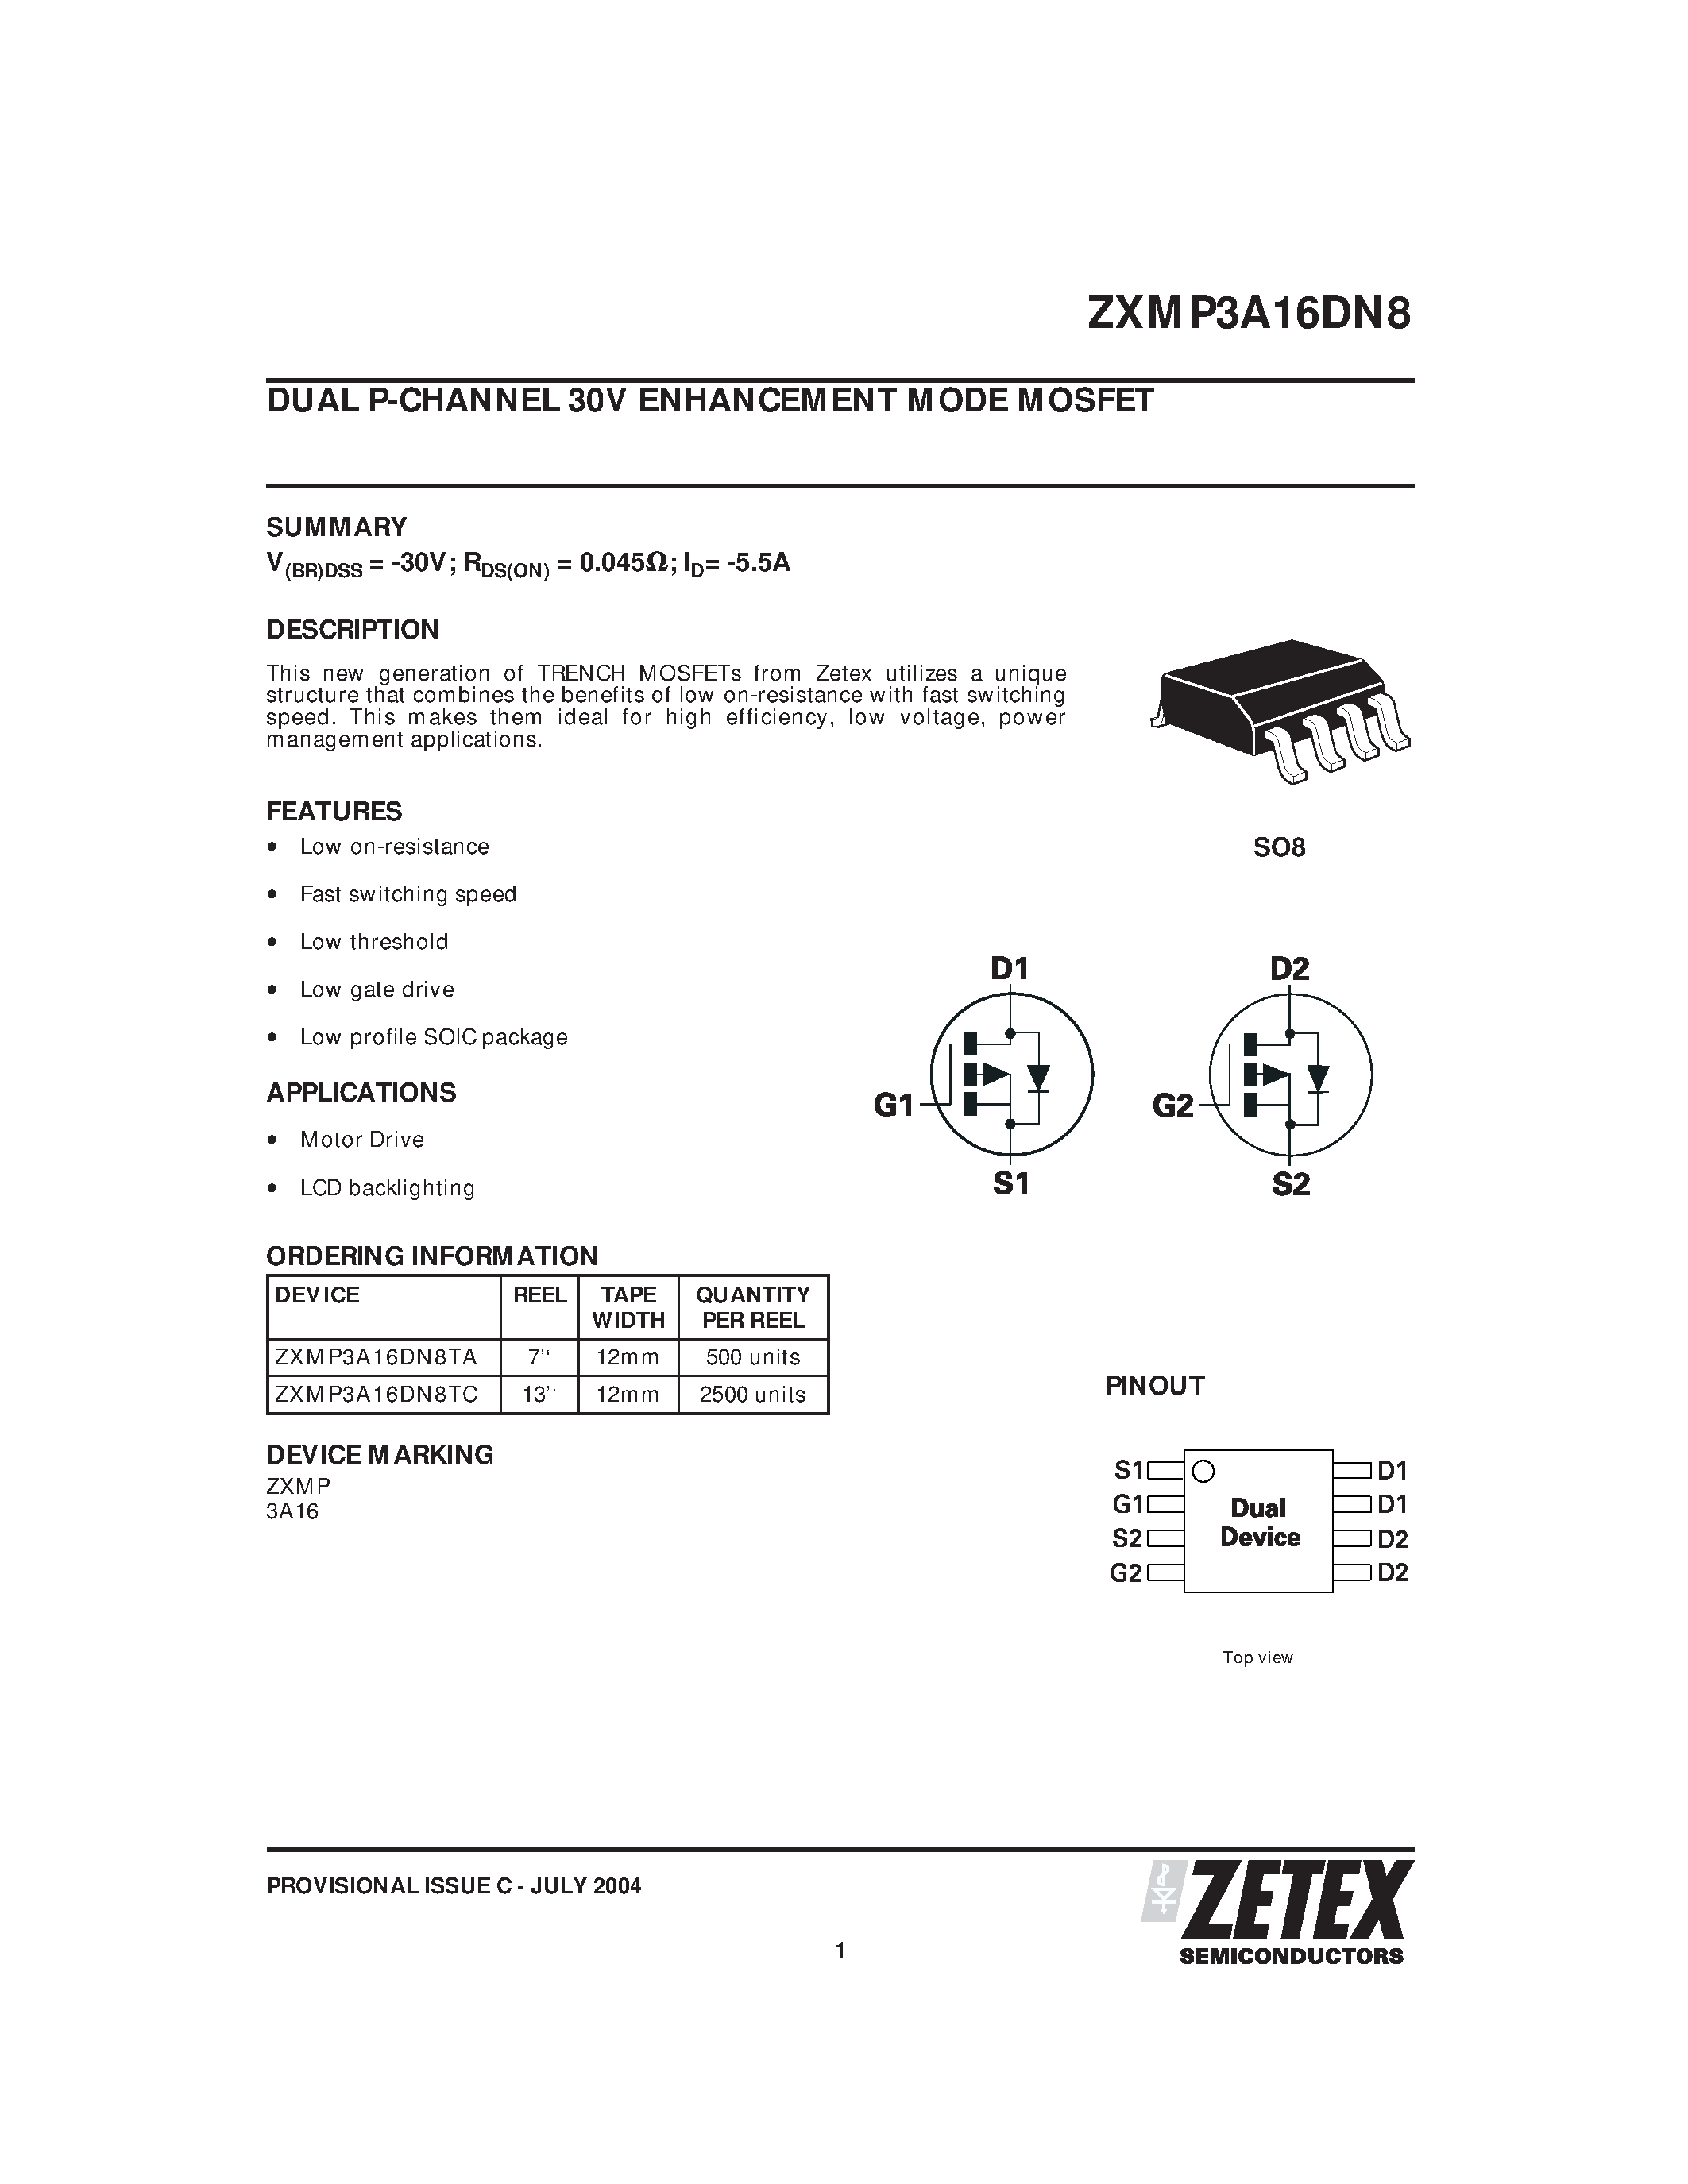 Datasheet ZXMP3A16DN8 - DUAL P-CHANNEL 30V ENHANCEMENT MODE MOSFET page 1